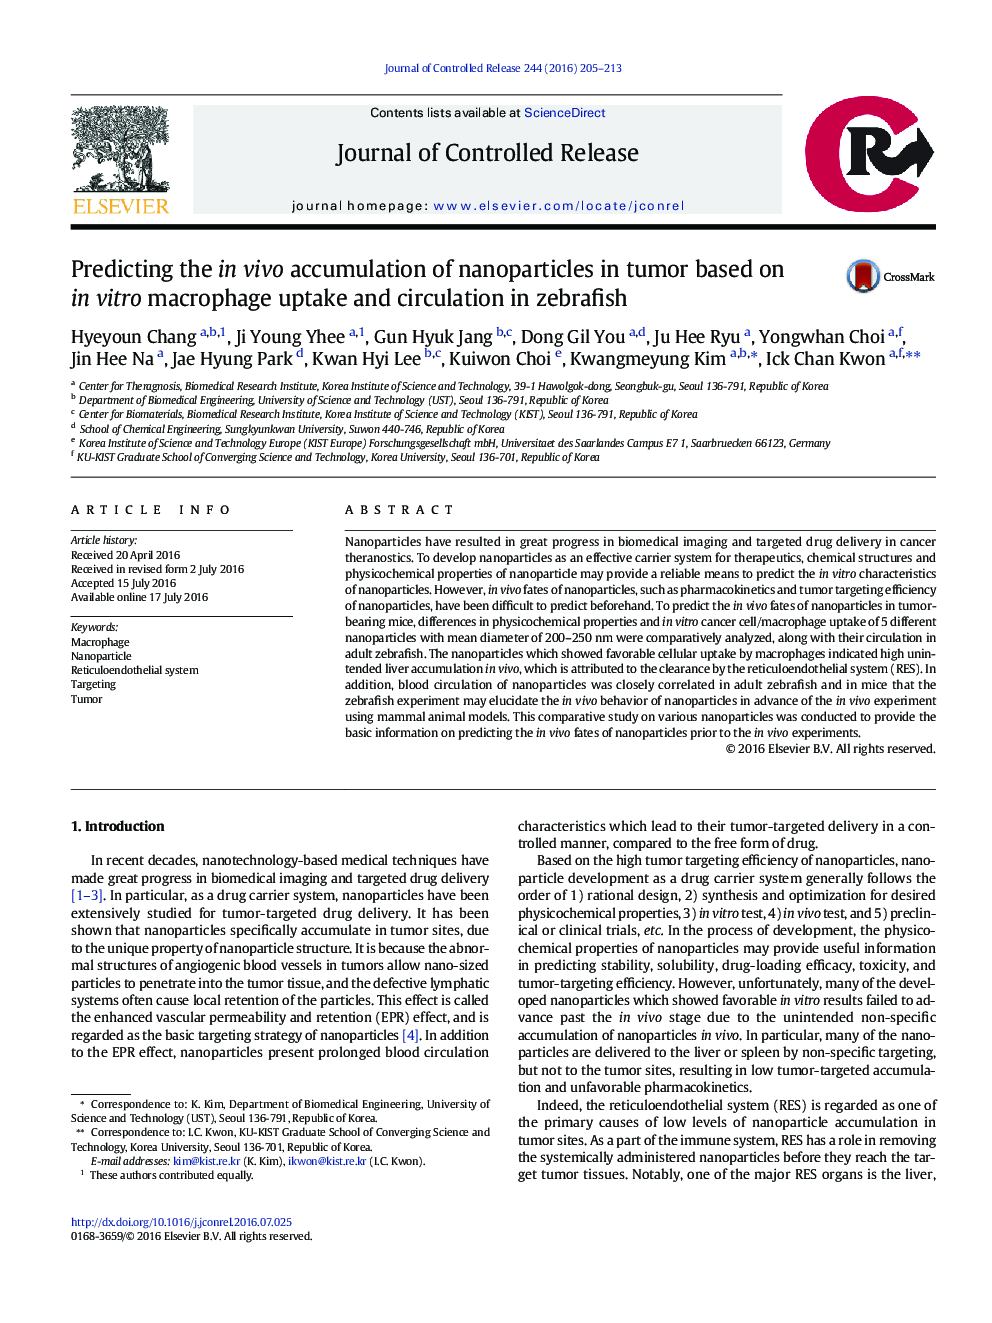 Predicting the in vivo accumulation of nanoparticles in tumor based on in vitro macrophage uptake and circulation in zebrafish